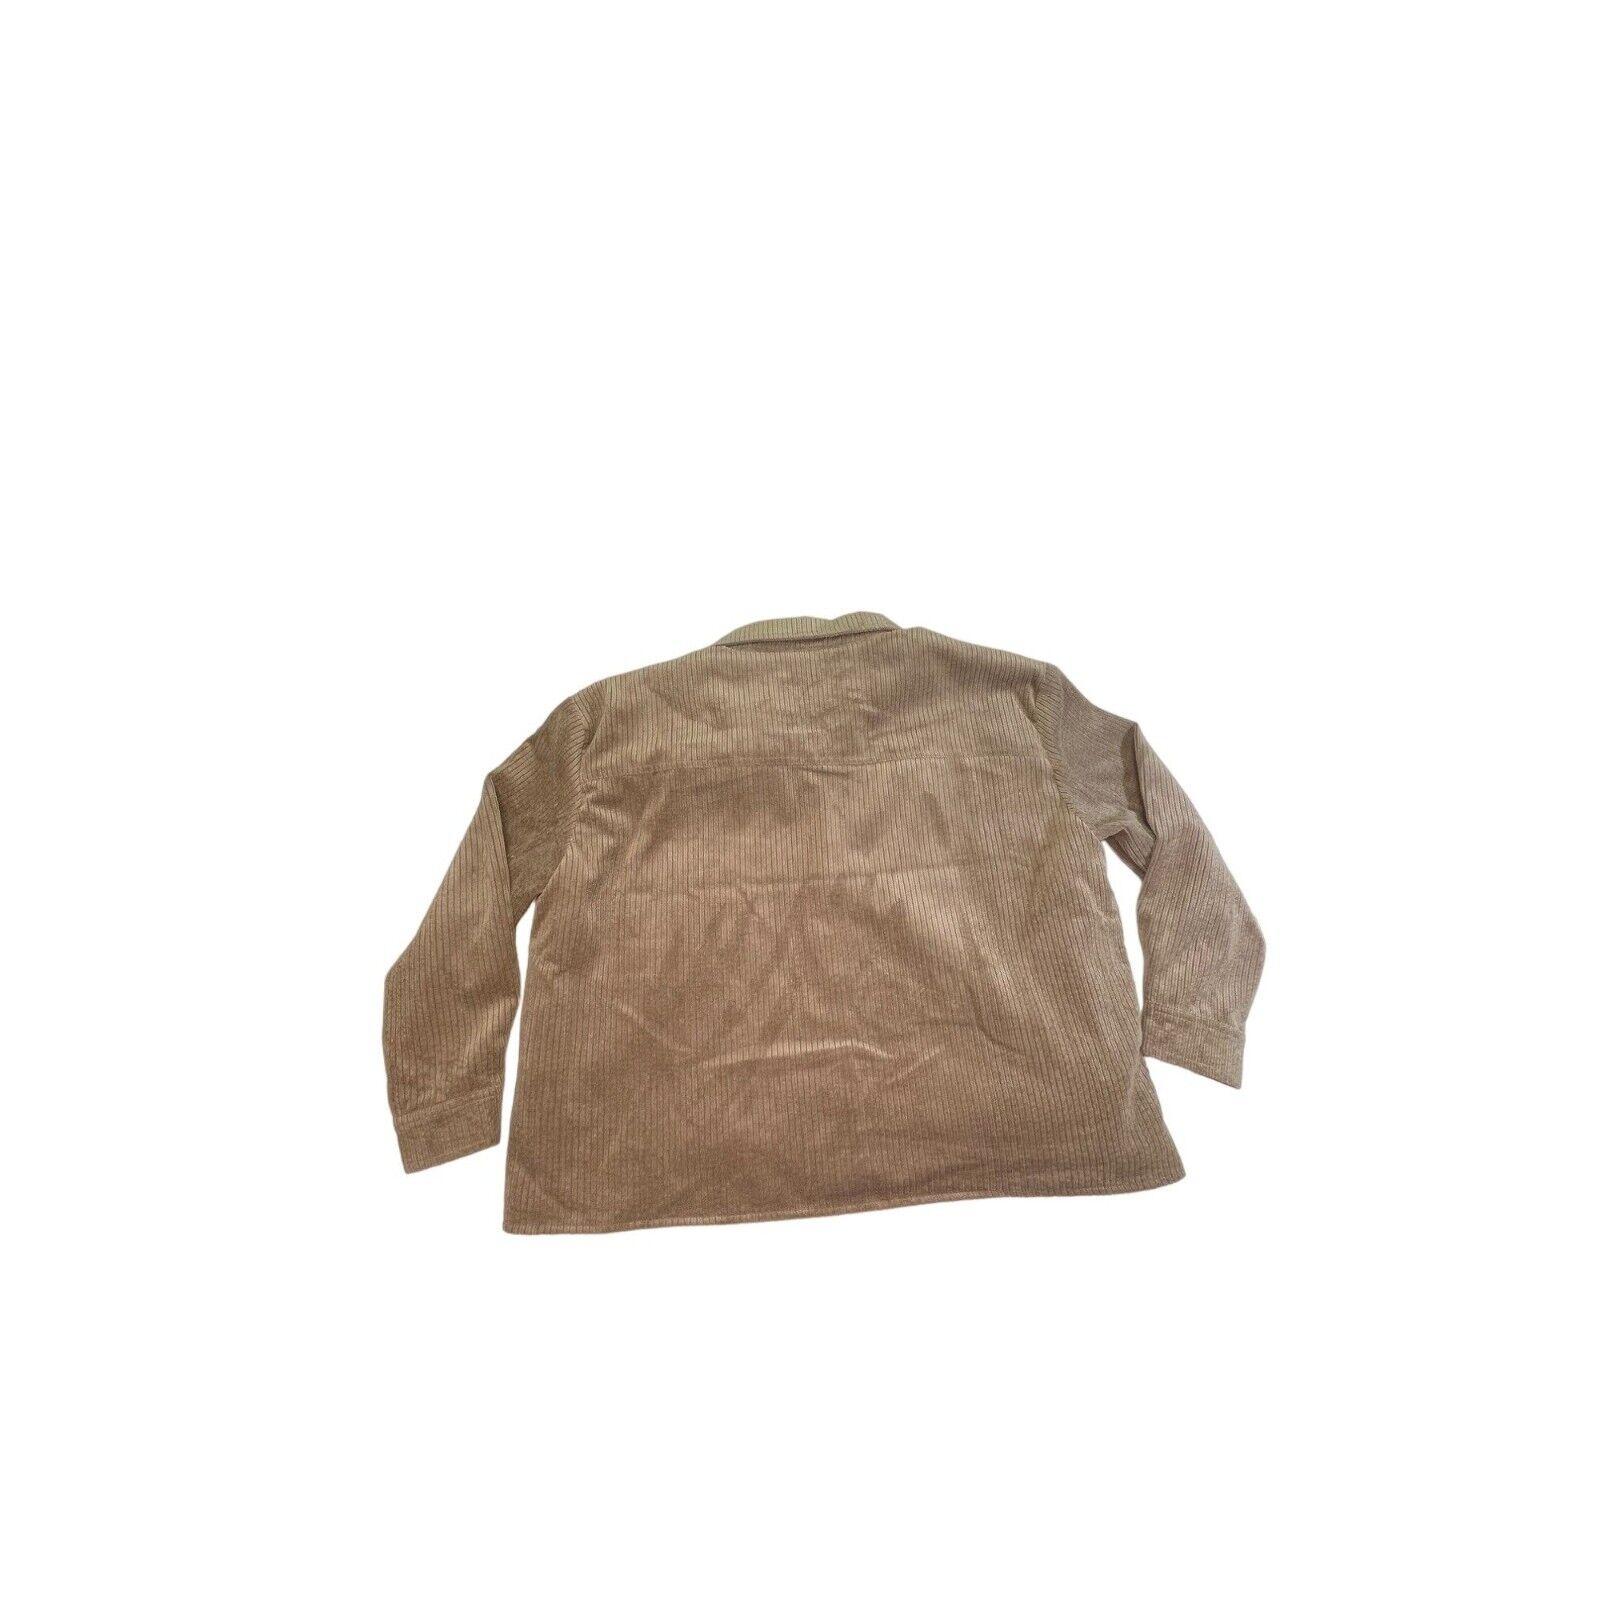 Cisono Fleece Tan Lined Corduroy jacket very warm… - image 10